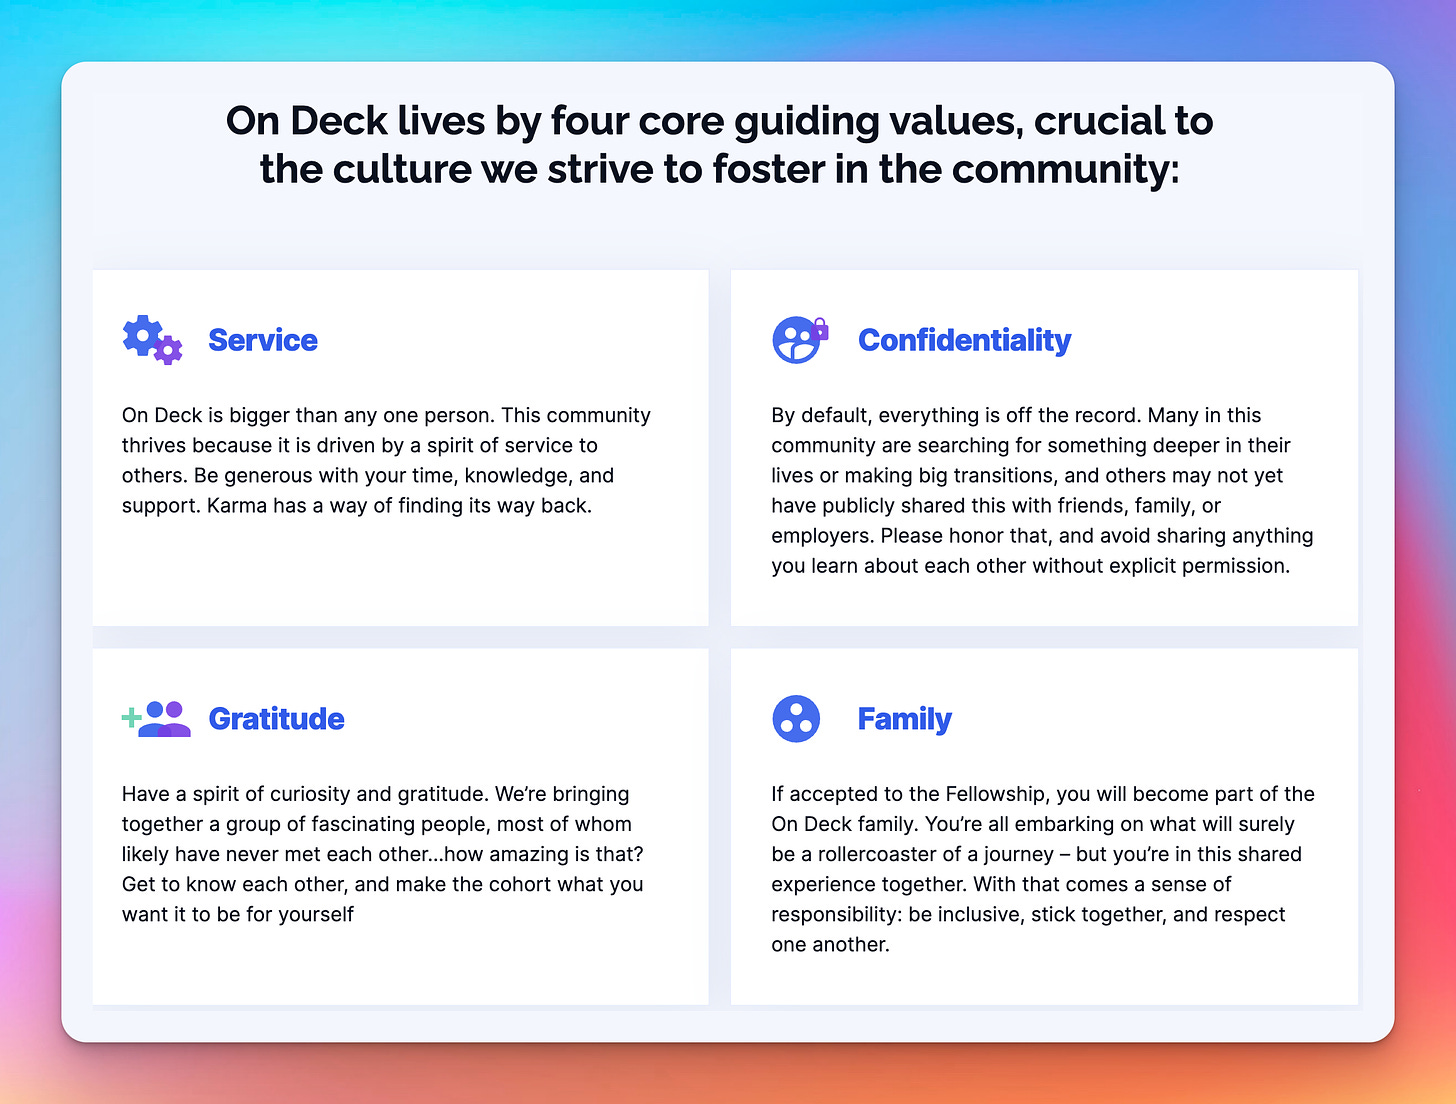 On Deck community core values